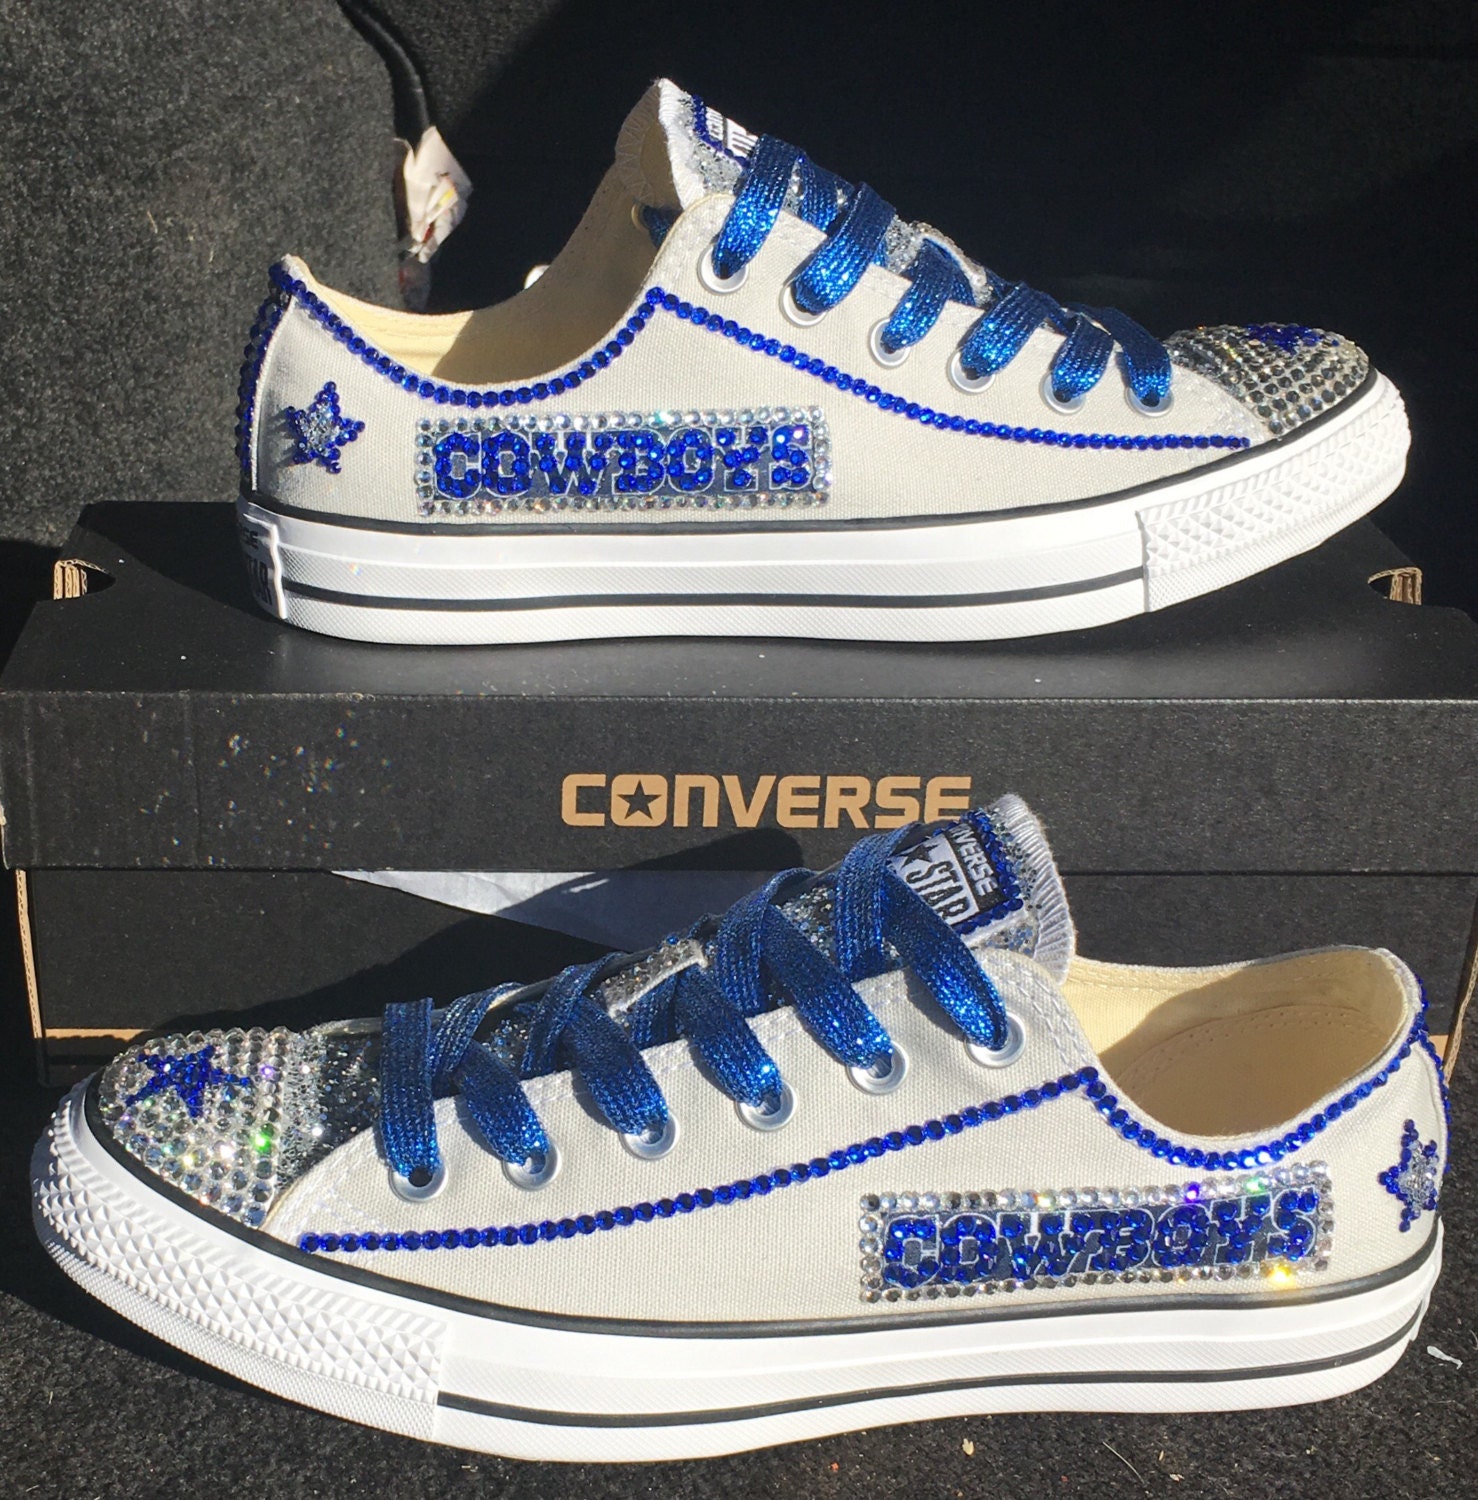 Dallas Cowboys Converse Shoes-simply Brilliant Must Haves | Etsy